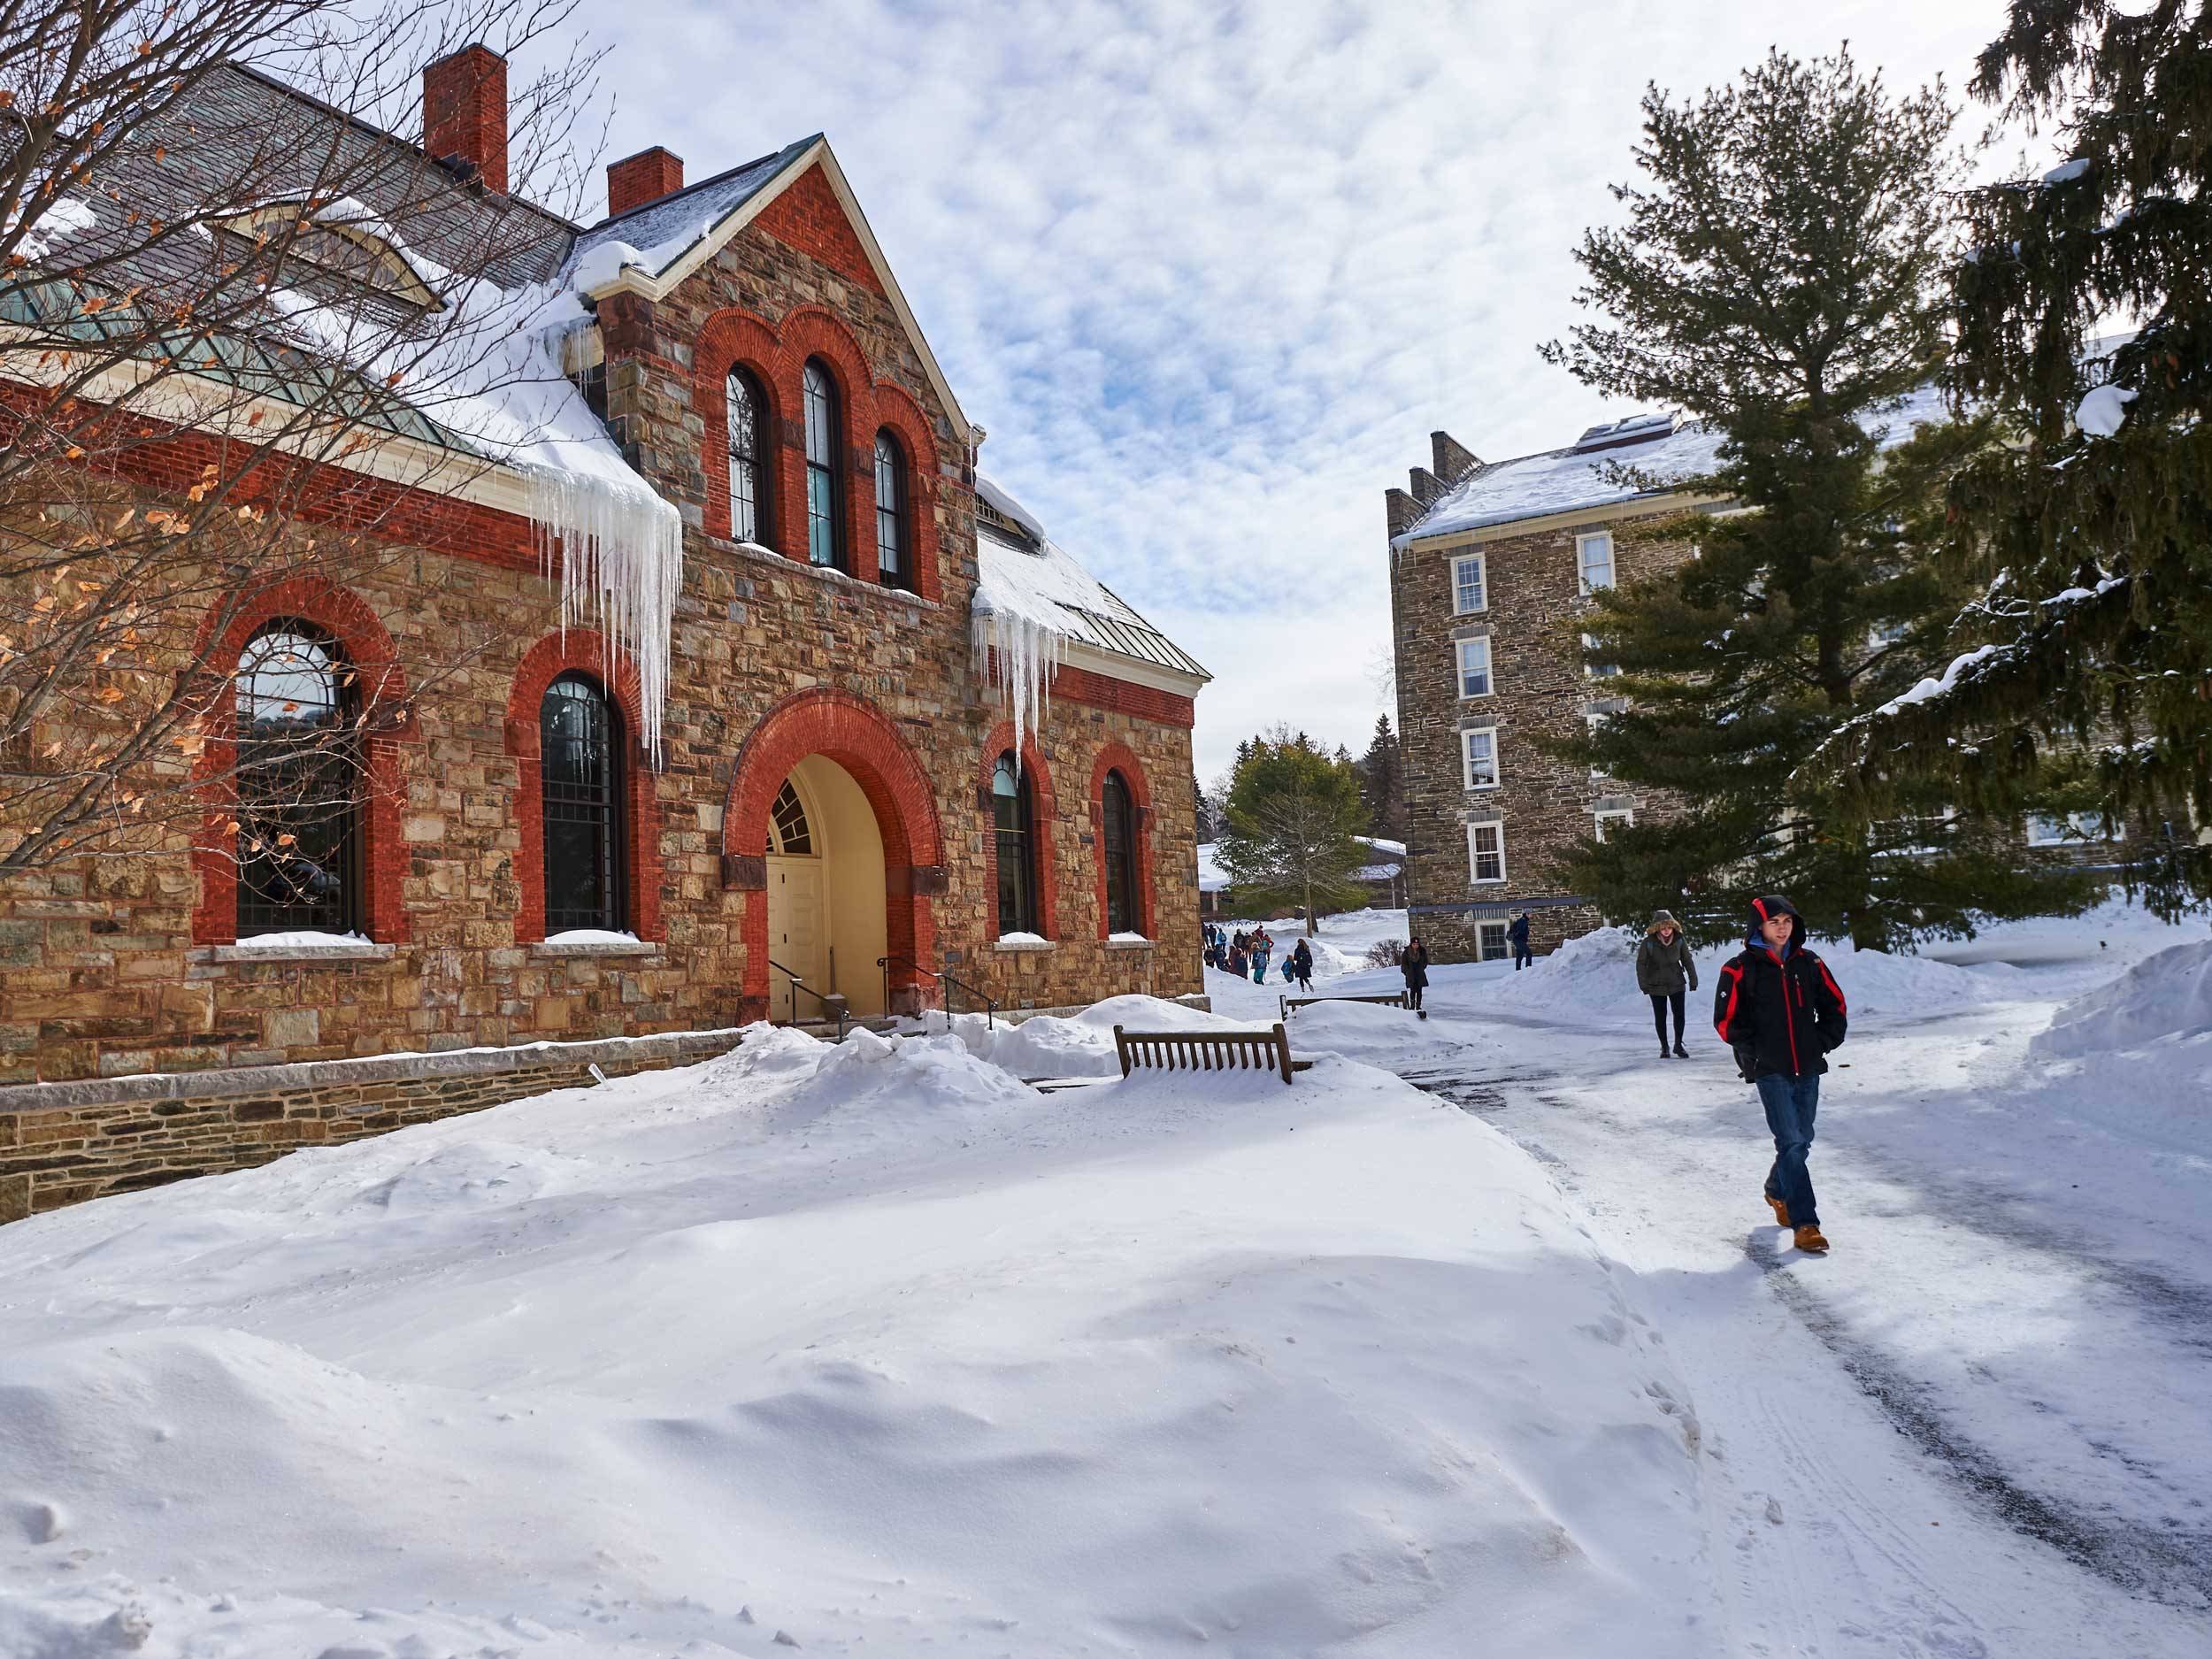 Students walk along snowy sidewalks outside Hascall Hall